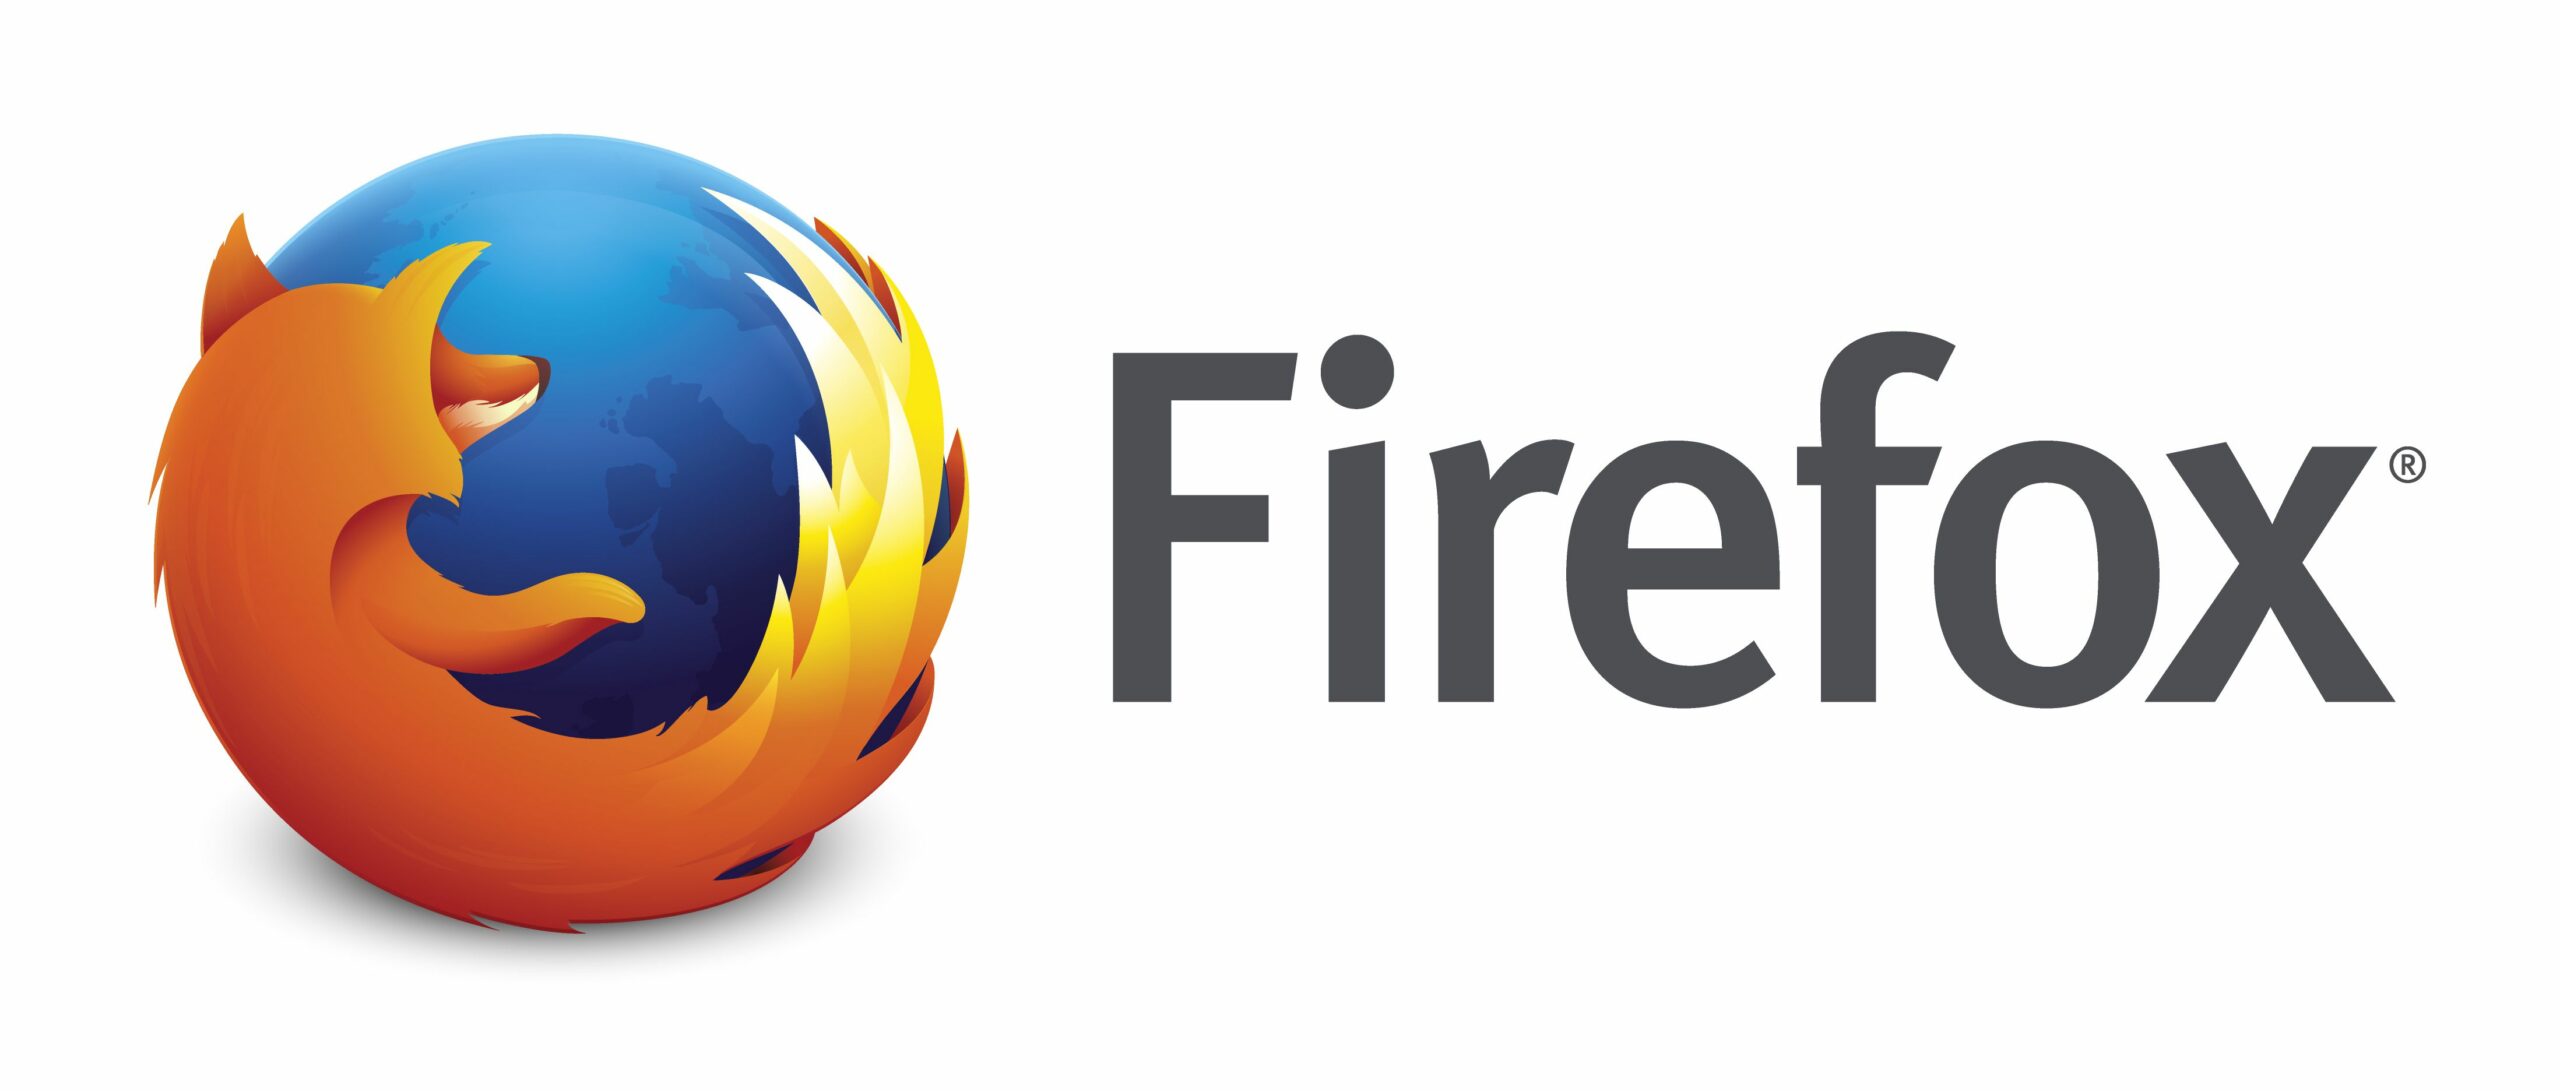 firefox logo 56a6d12b5f9b58b7d0e4f393 scaled